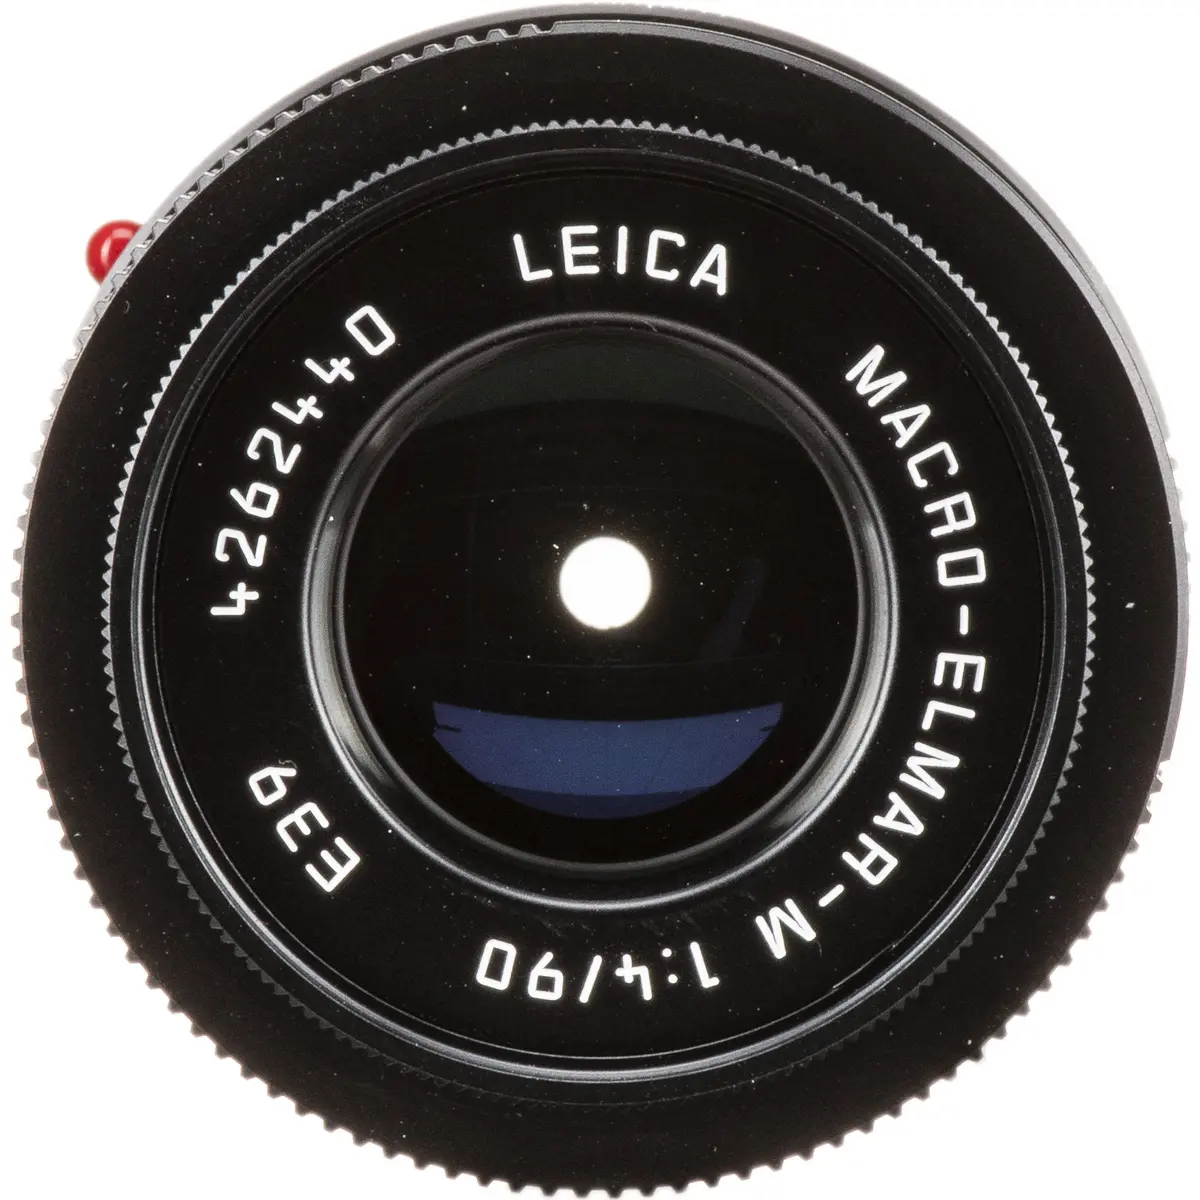 5. Leica Macro-Elmar-M 90mm F4 (11670)